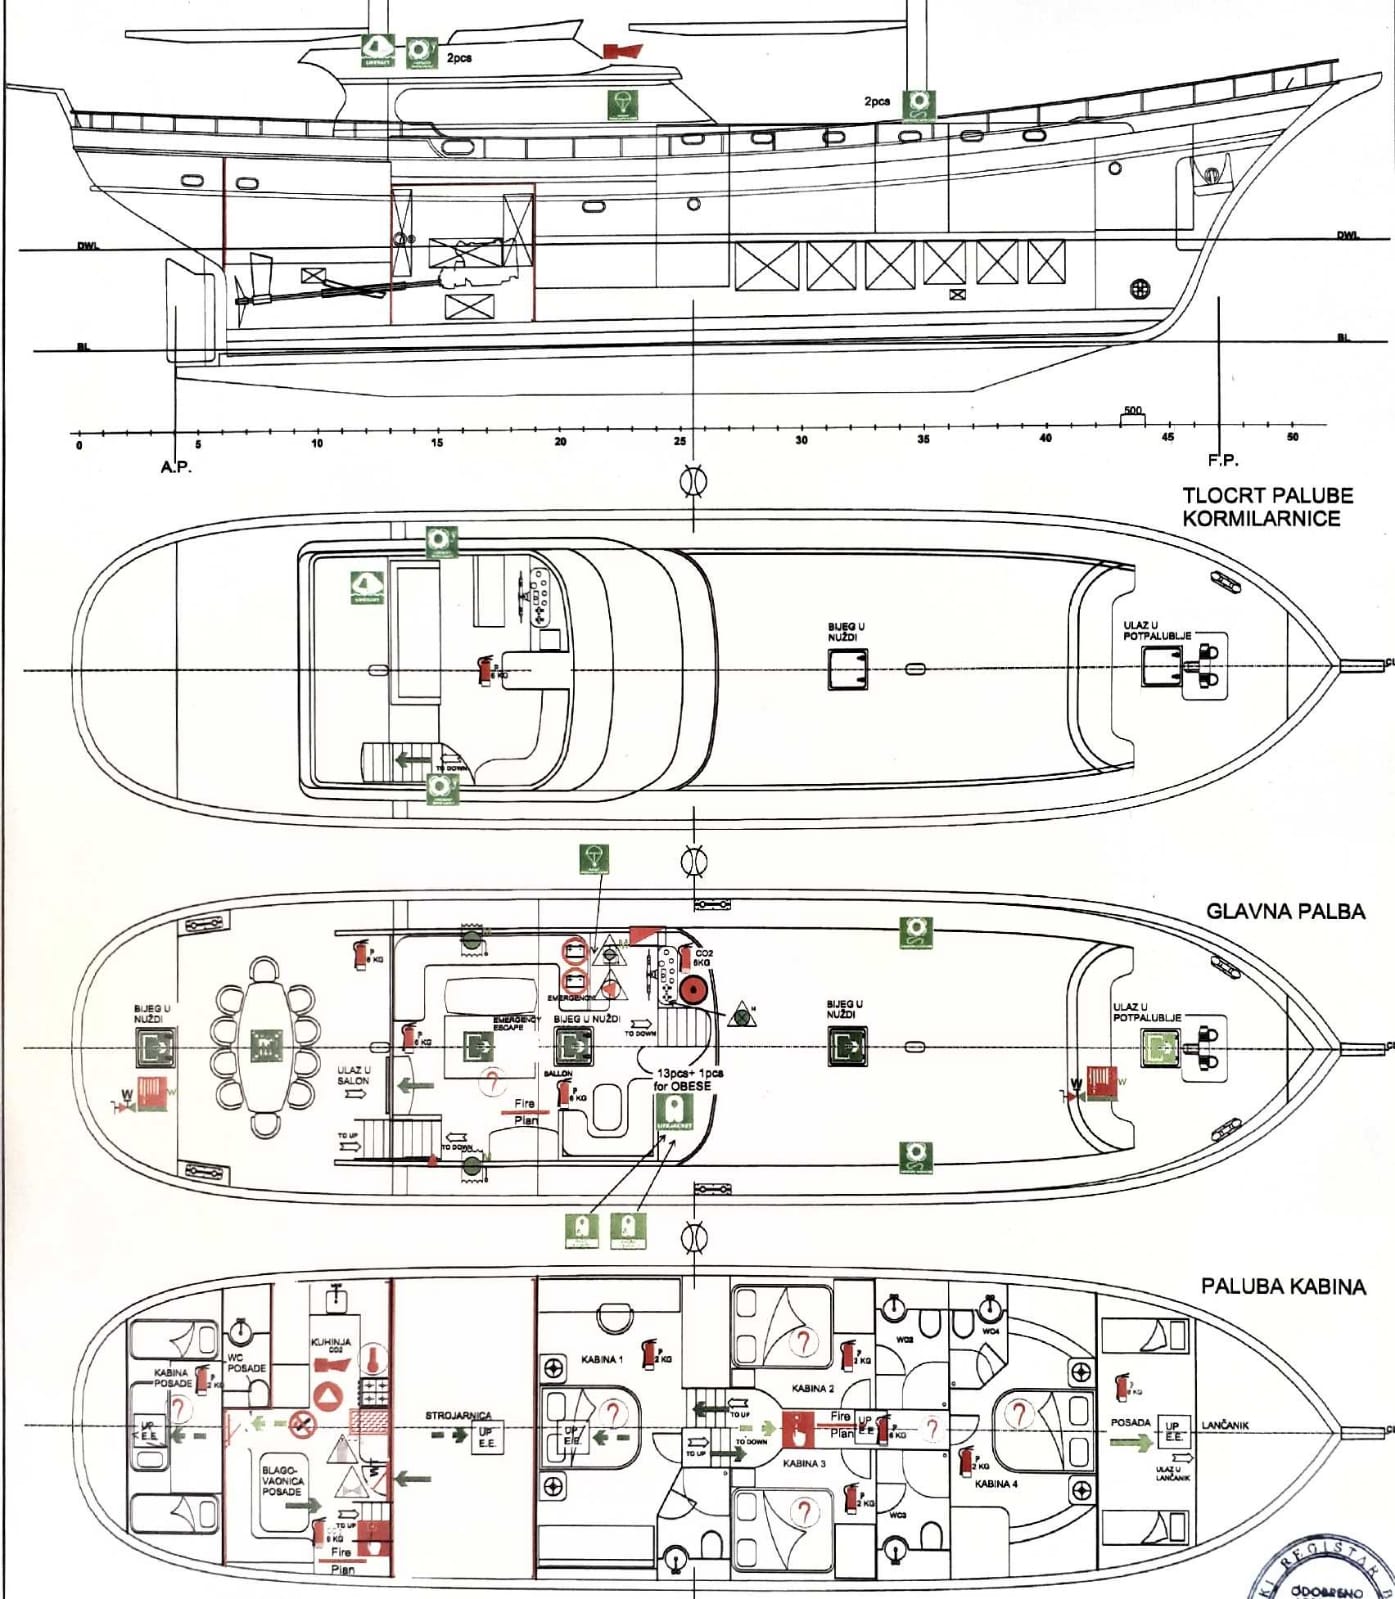 Lotus yacht layout